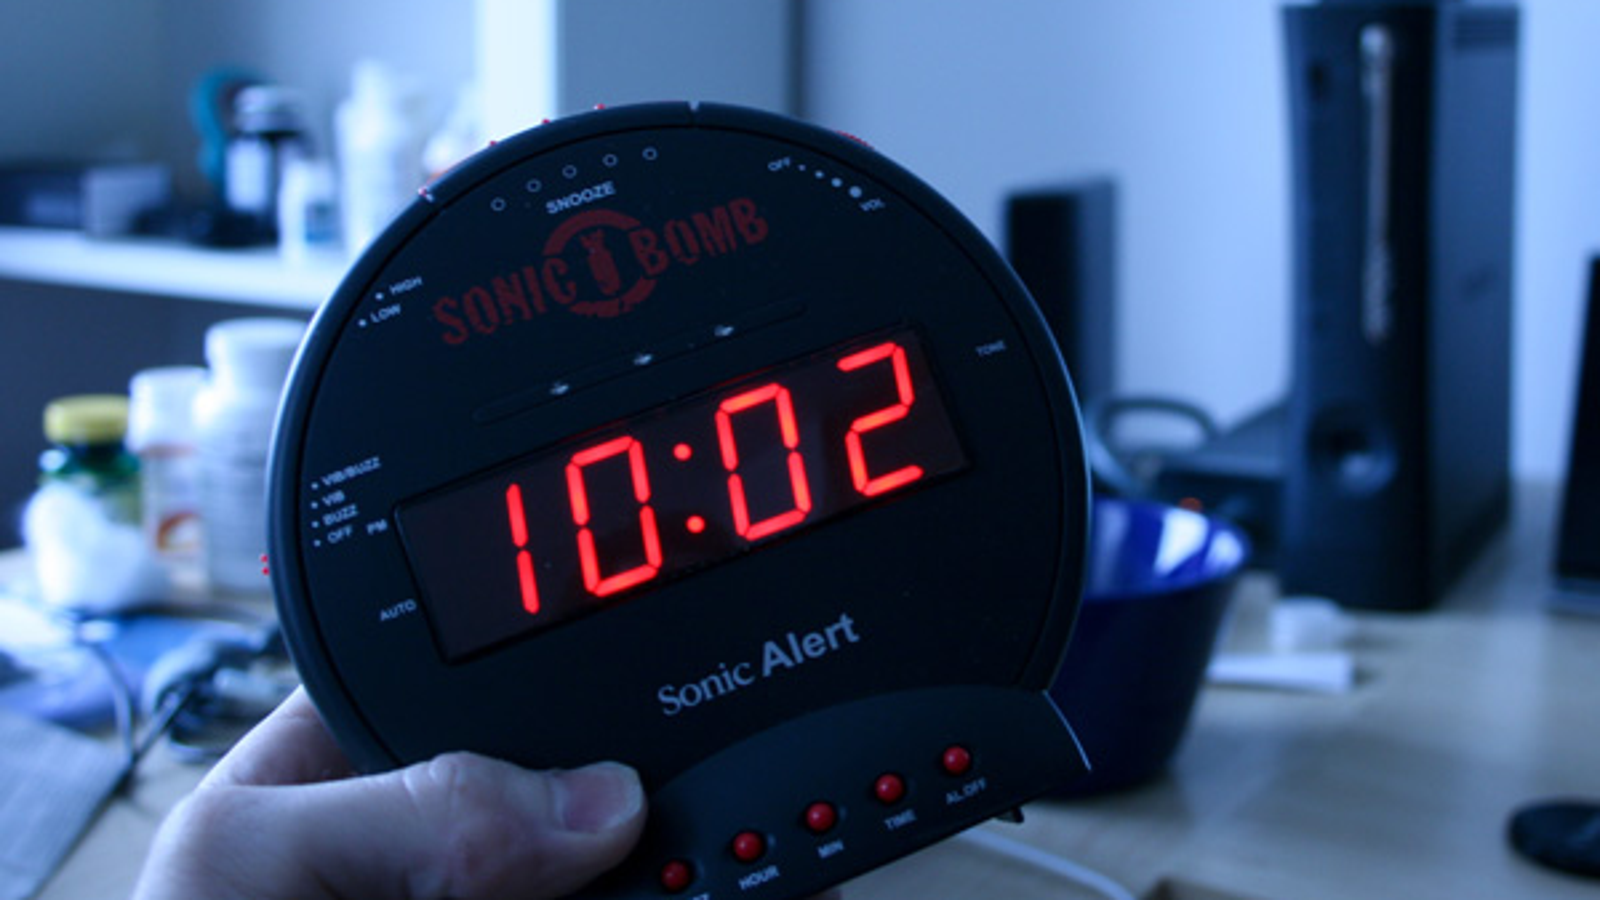 sonic bomb alarm clock functions